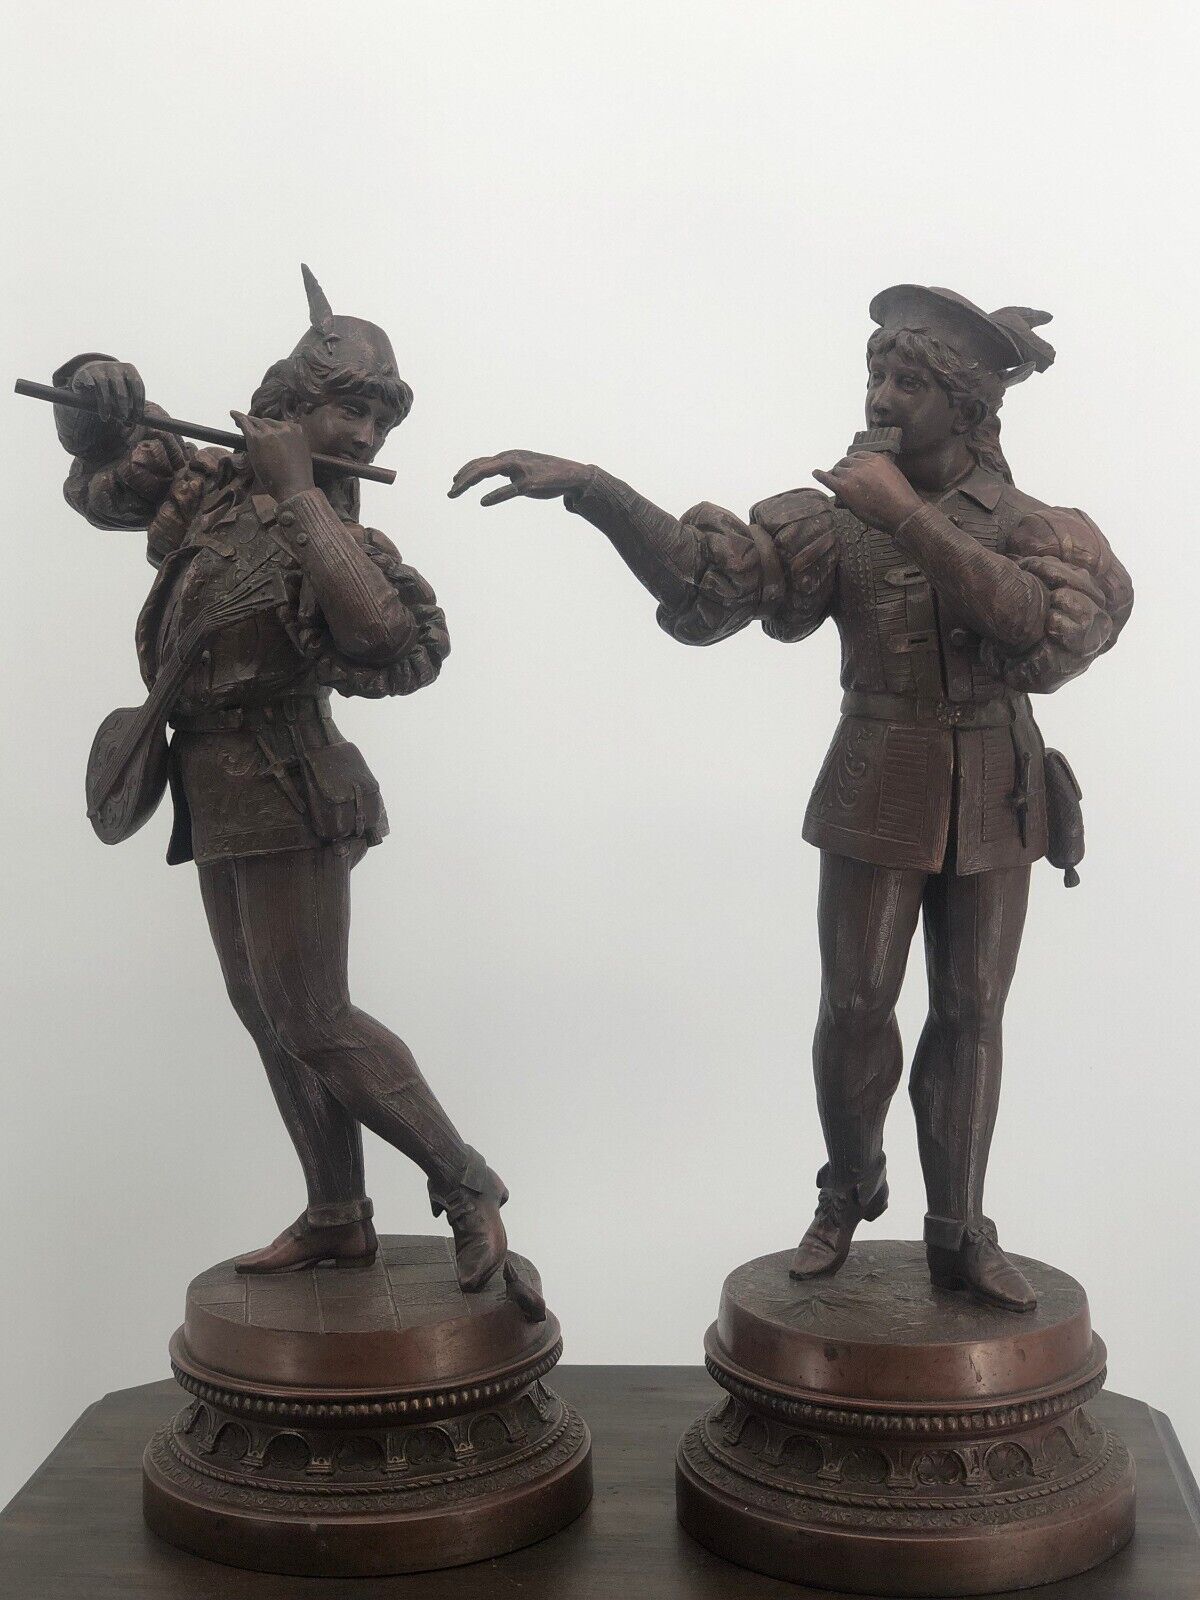 Antique Nicholas Muller-N.Muller’s Sons NY cast Metal Pair of Spelter Statues